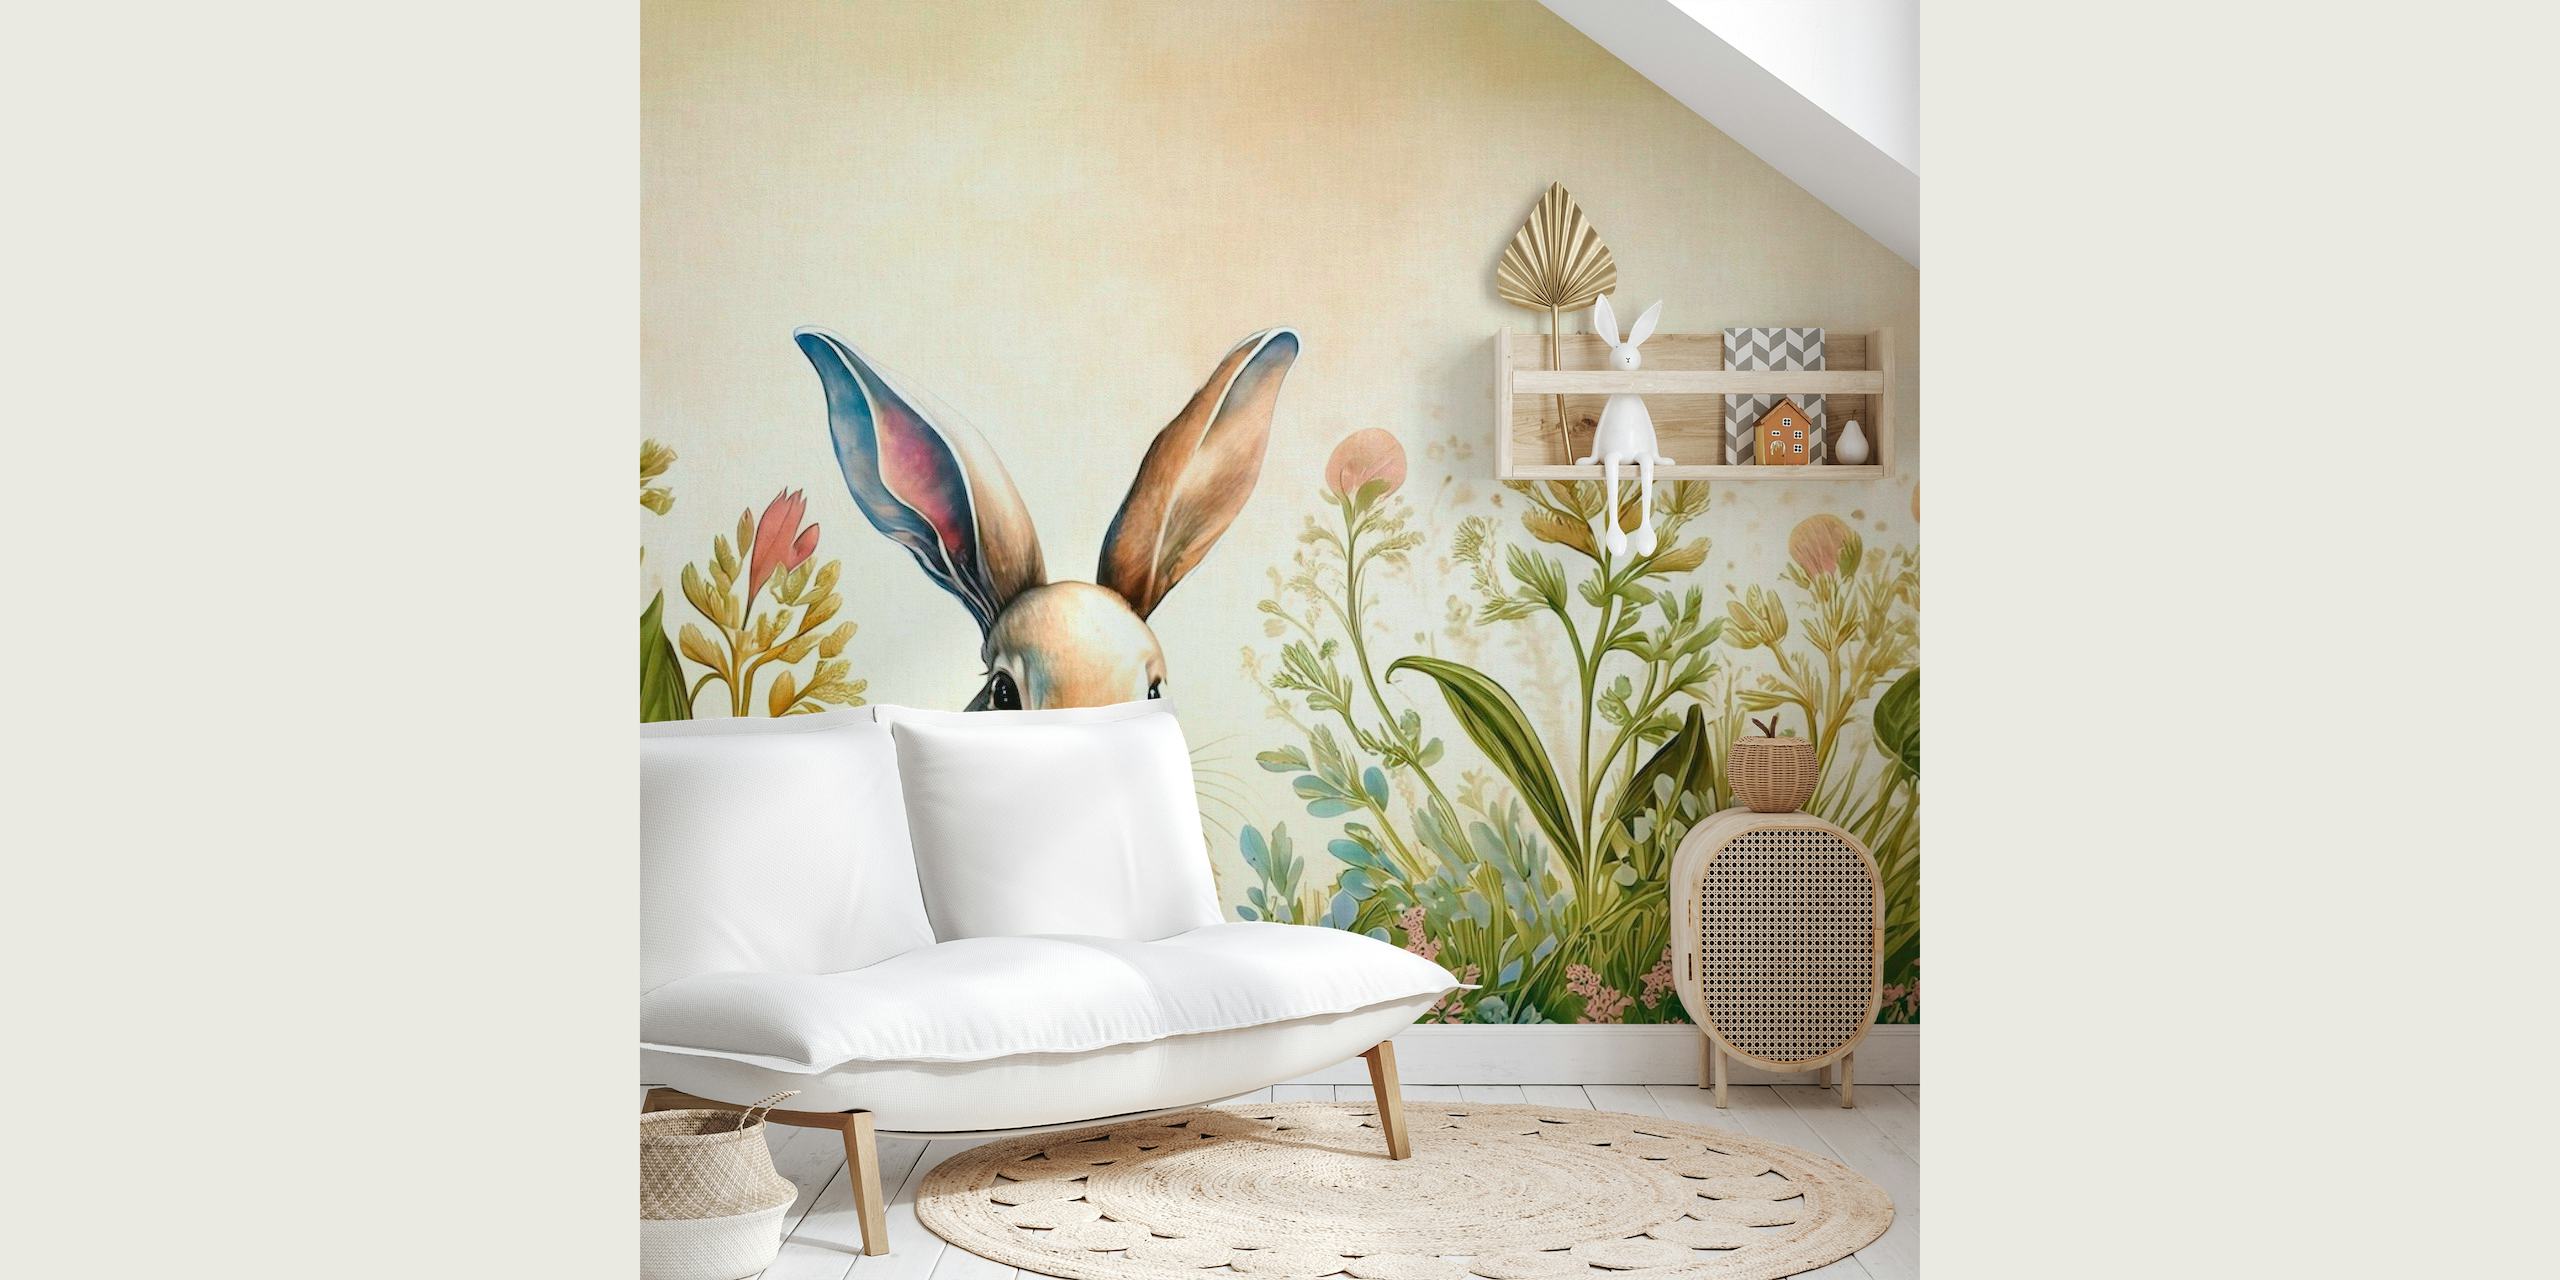 The little rabbit wallpaper